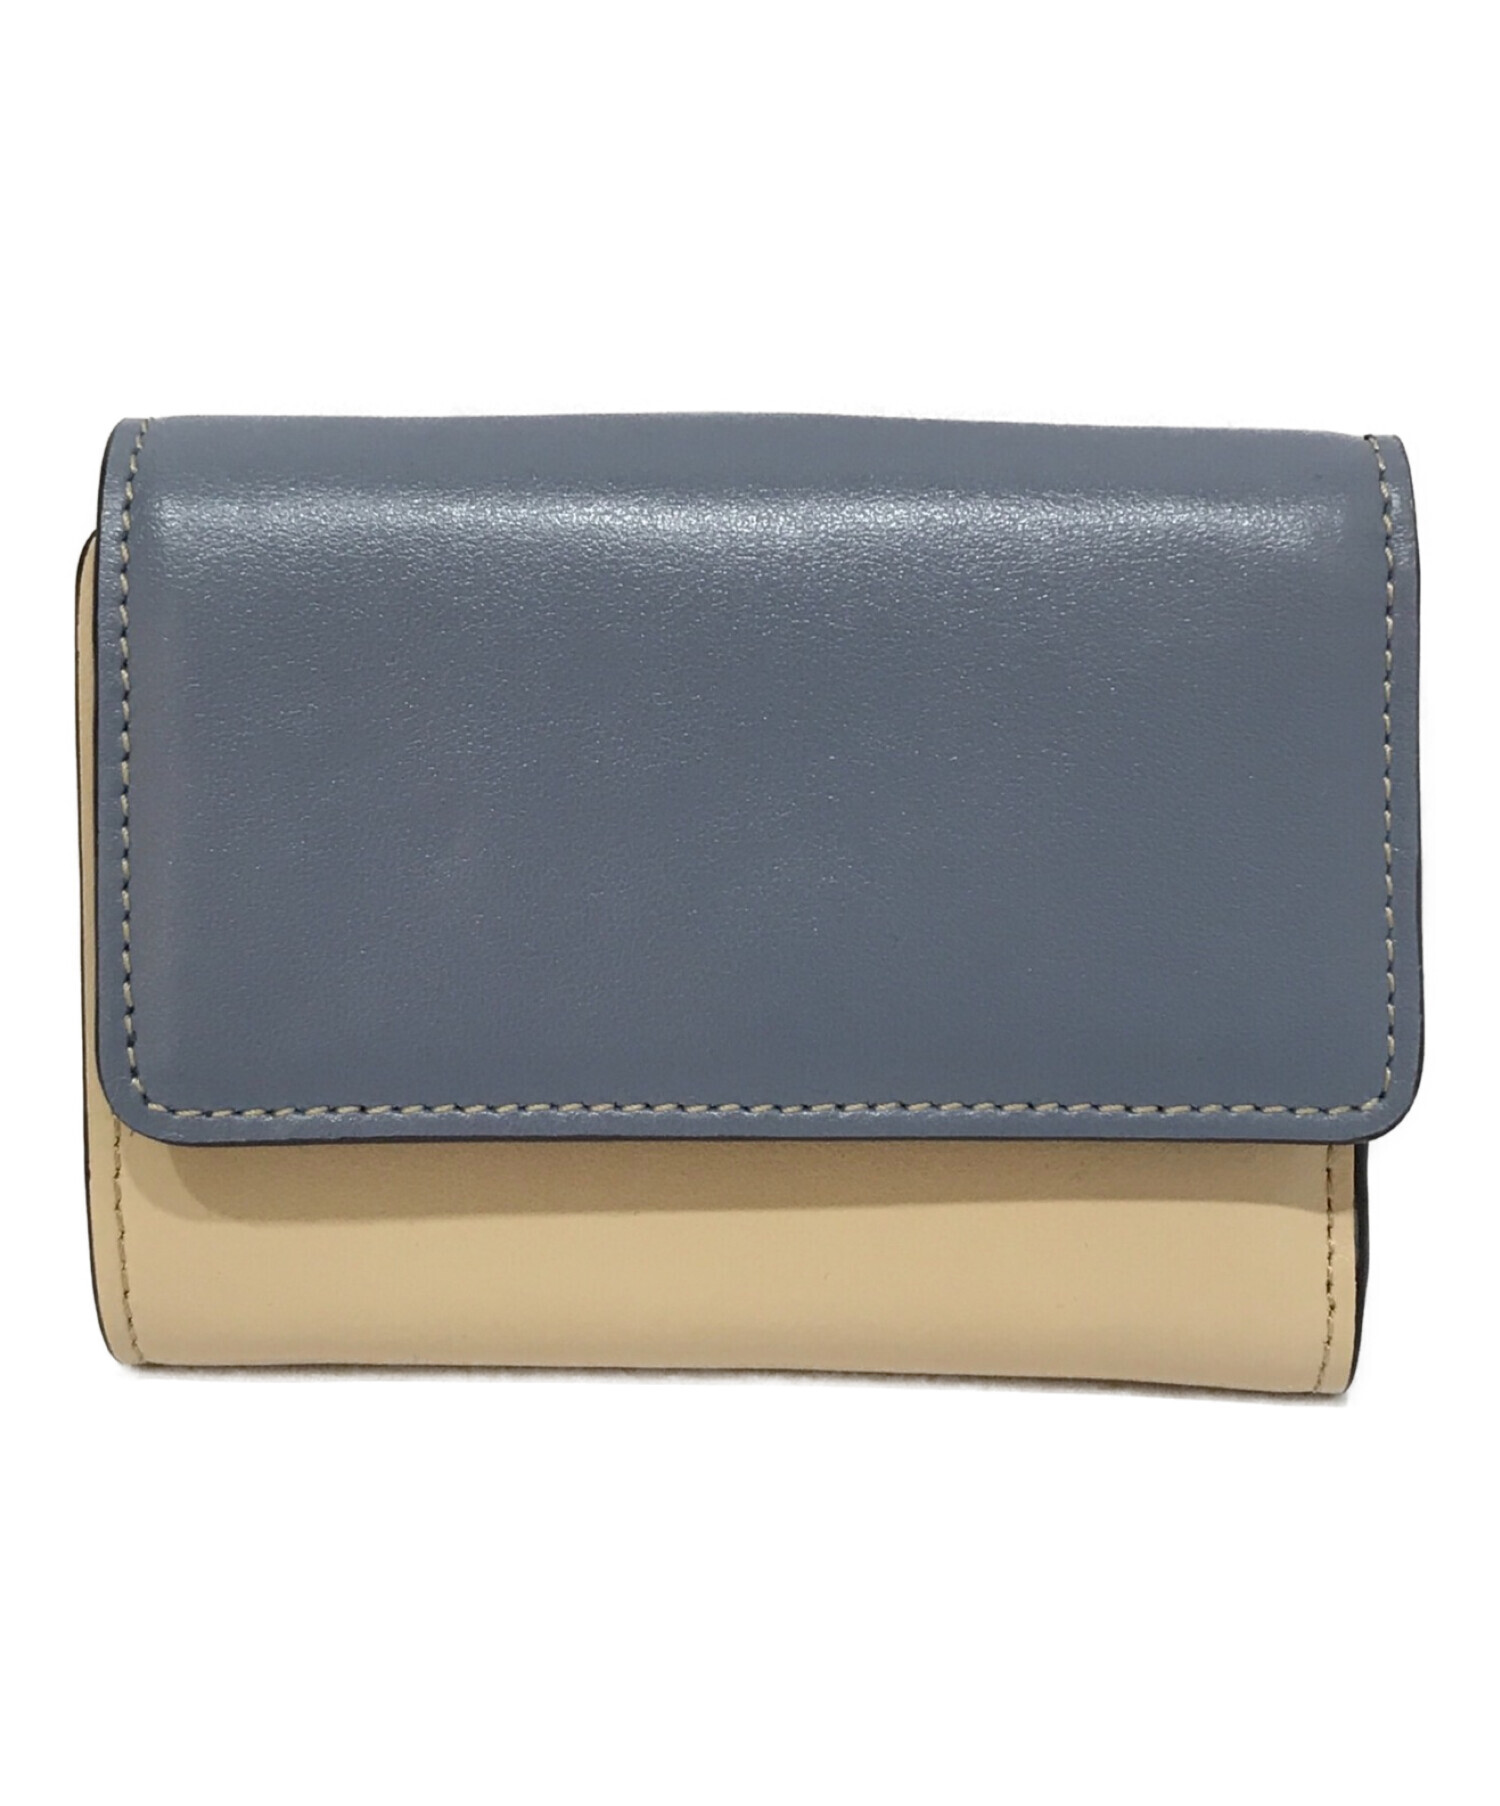 Chloe wallet ブルー - 折り財布